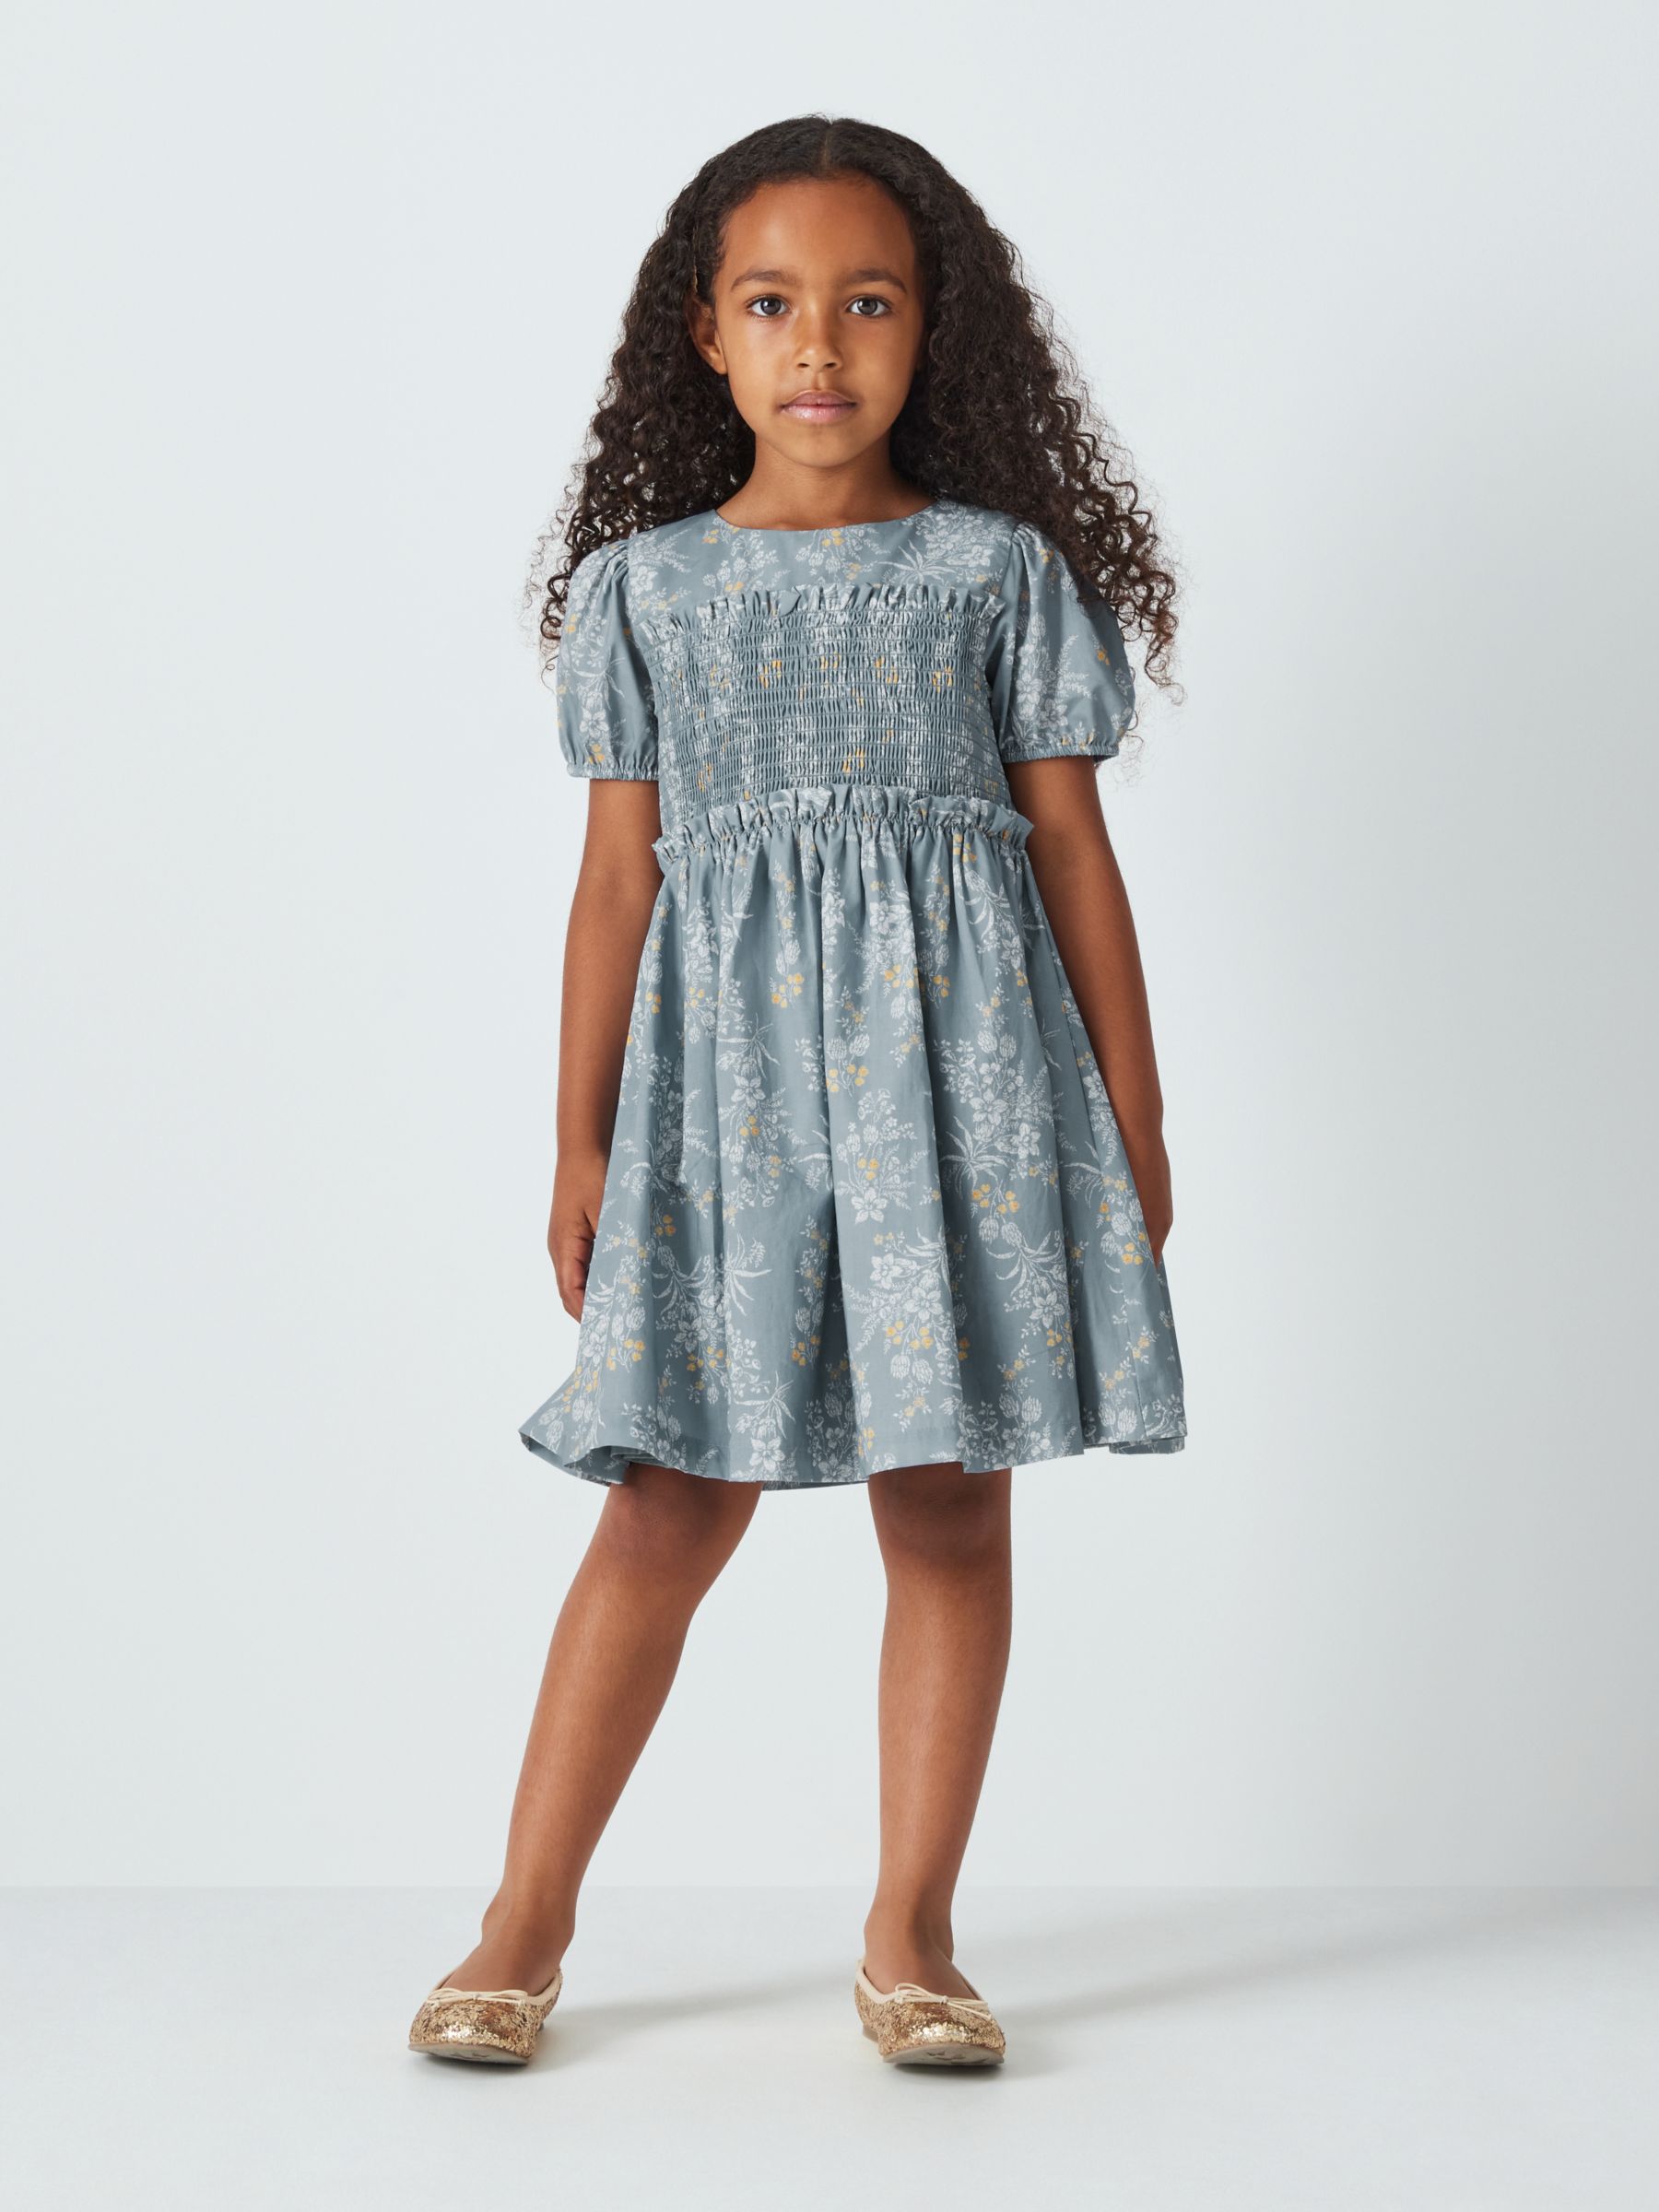 John Lewis Heirloom Collection Kids' Vintage Floral Shirred Dress, Blue, 10 years